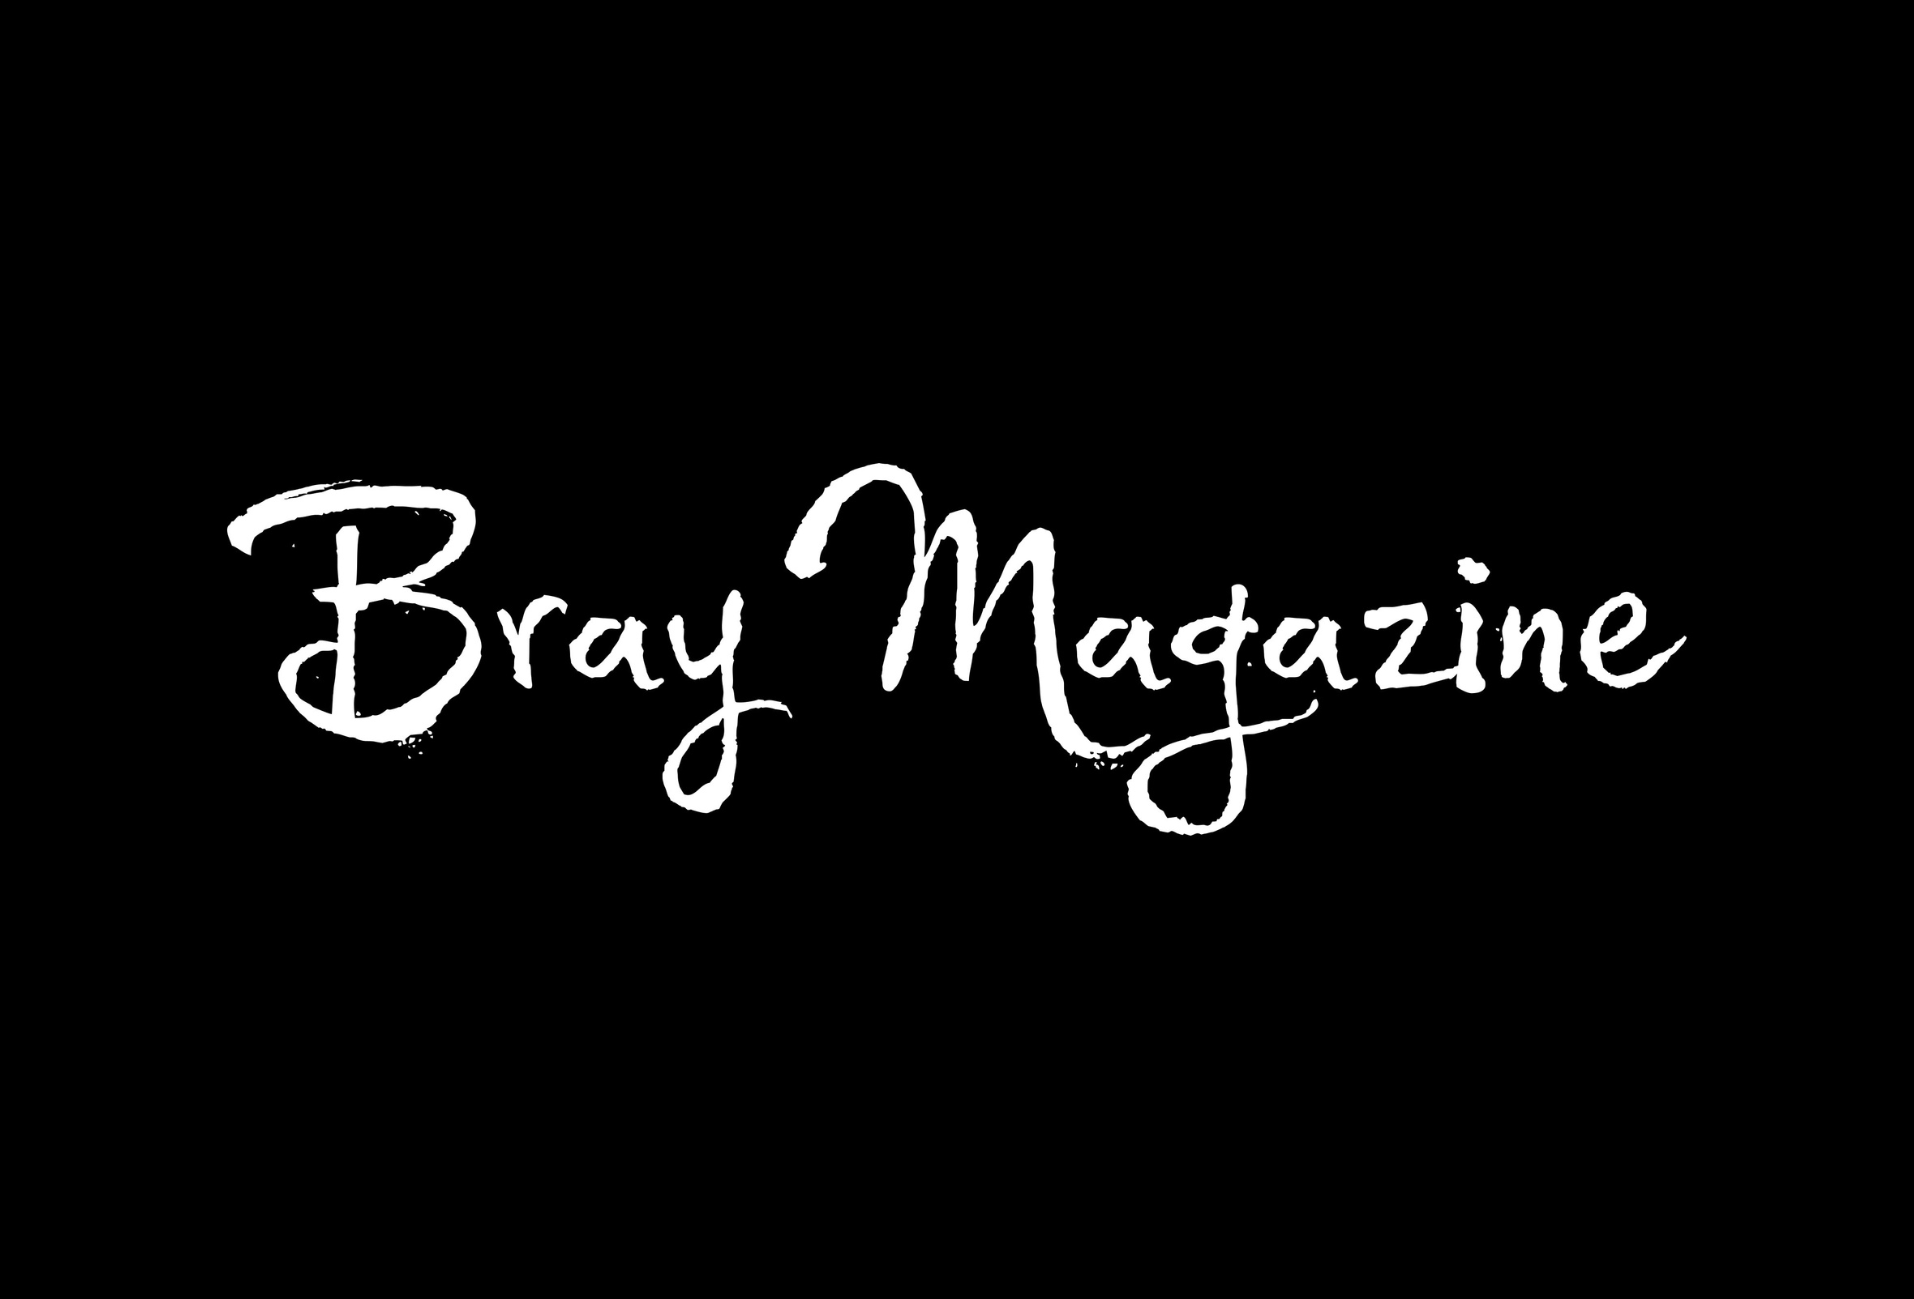 The Bray Magazine